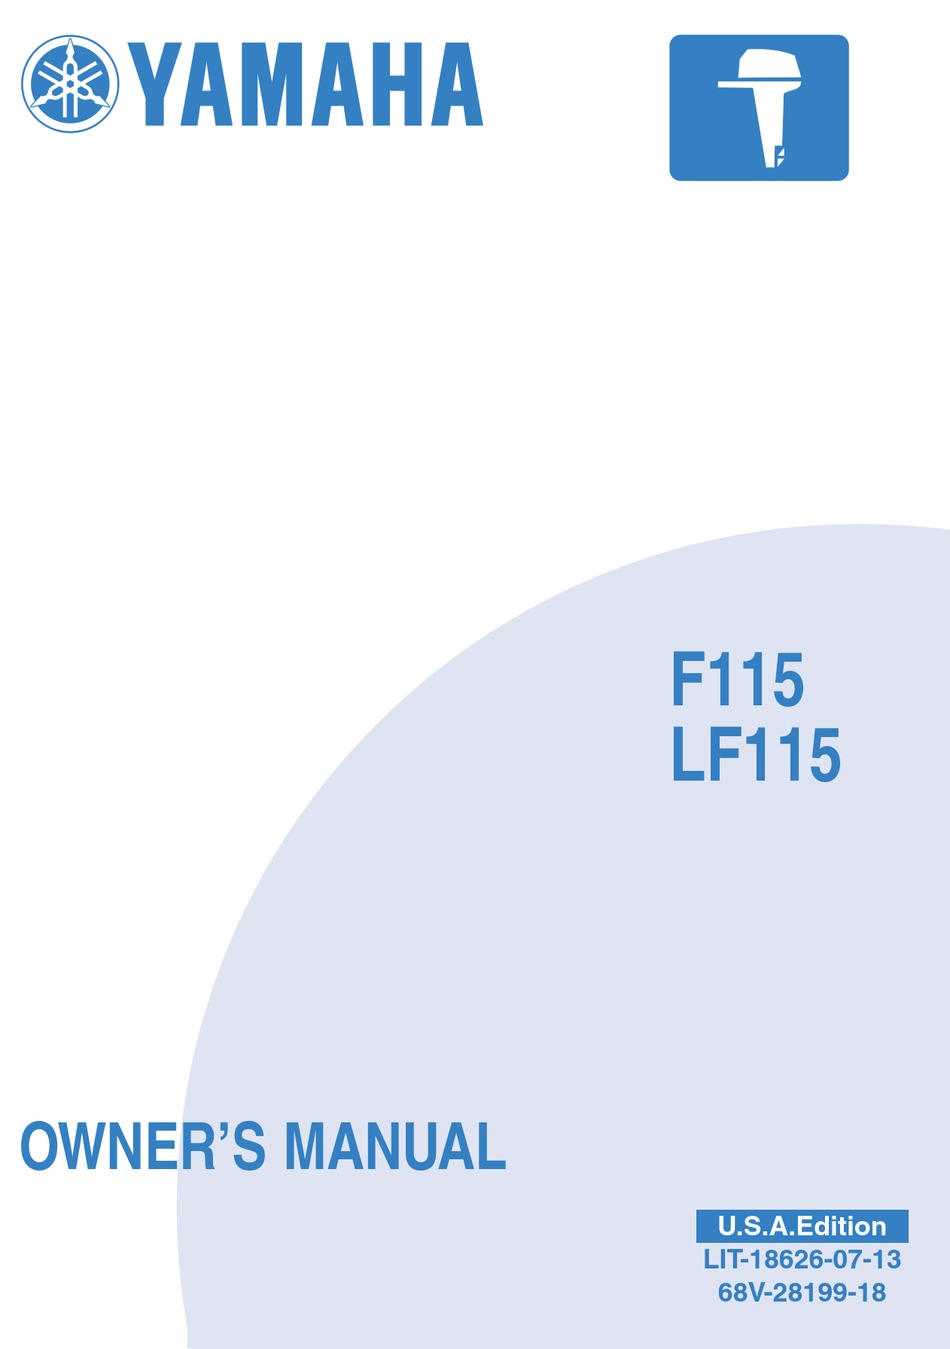 YAMAHA F115 OWNER'S MANUAL Pdf Download | ManualsLib